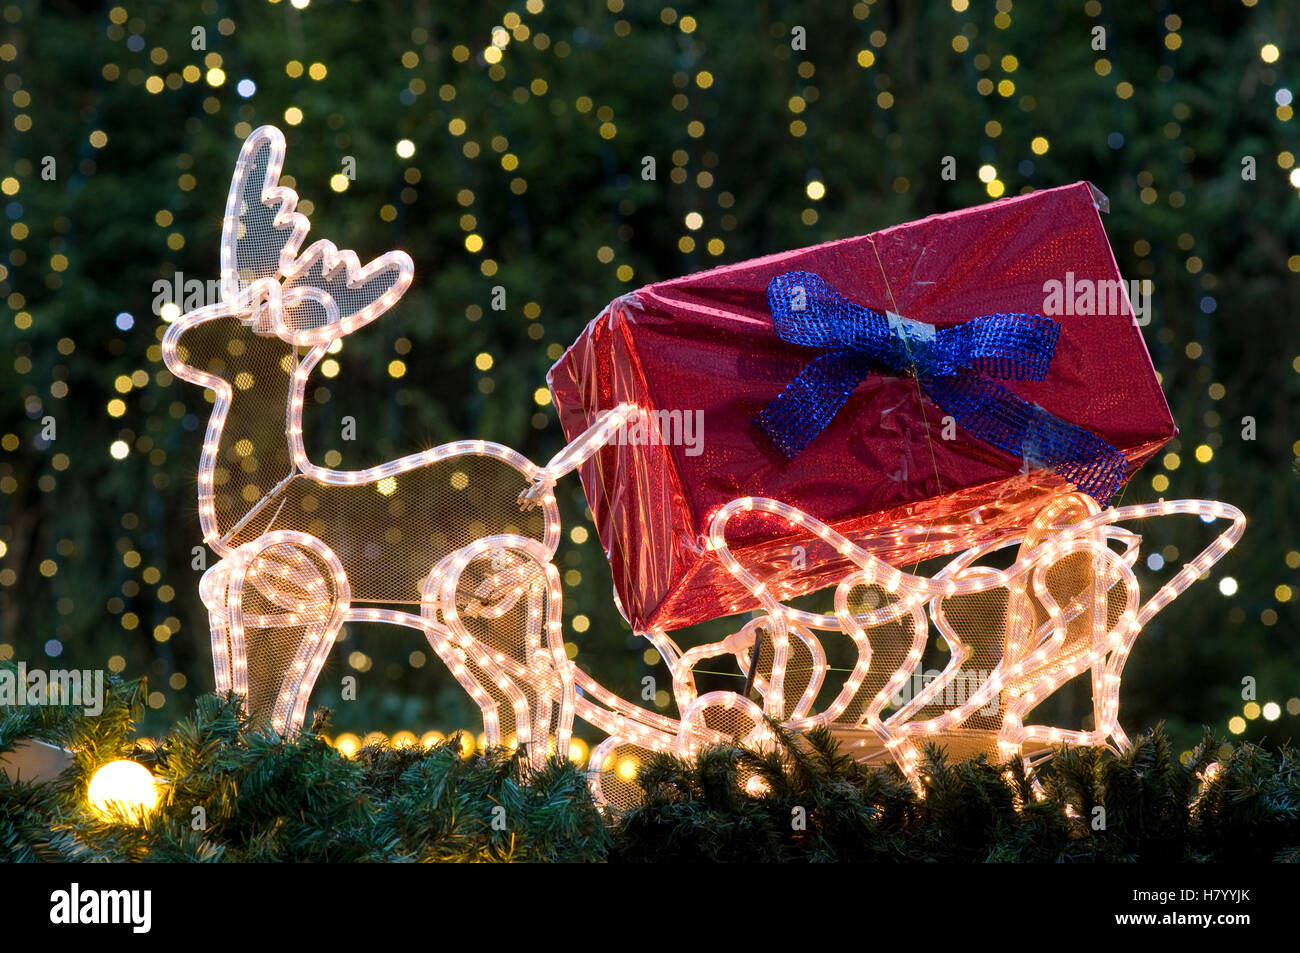 Illuminated reindeer sleigh on a Christmas market stall Stock Photo